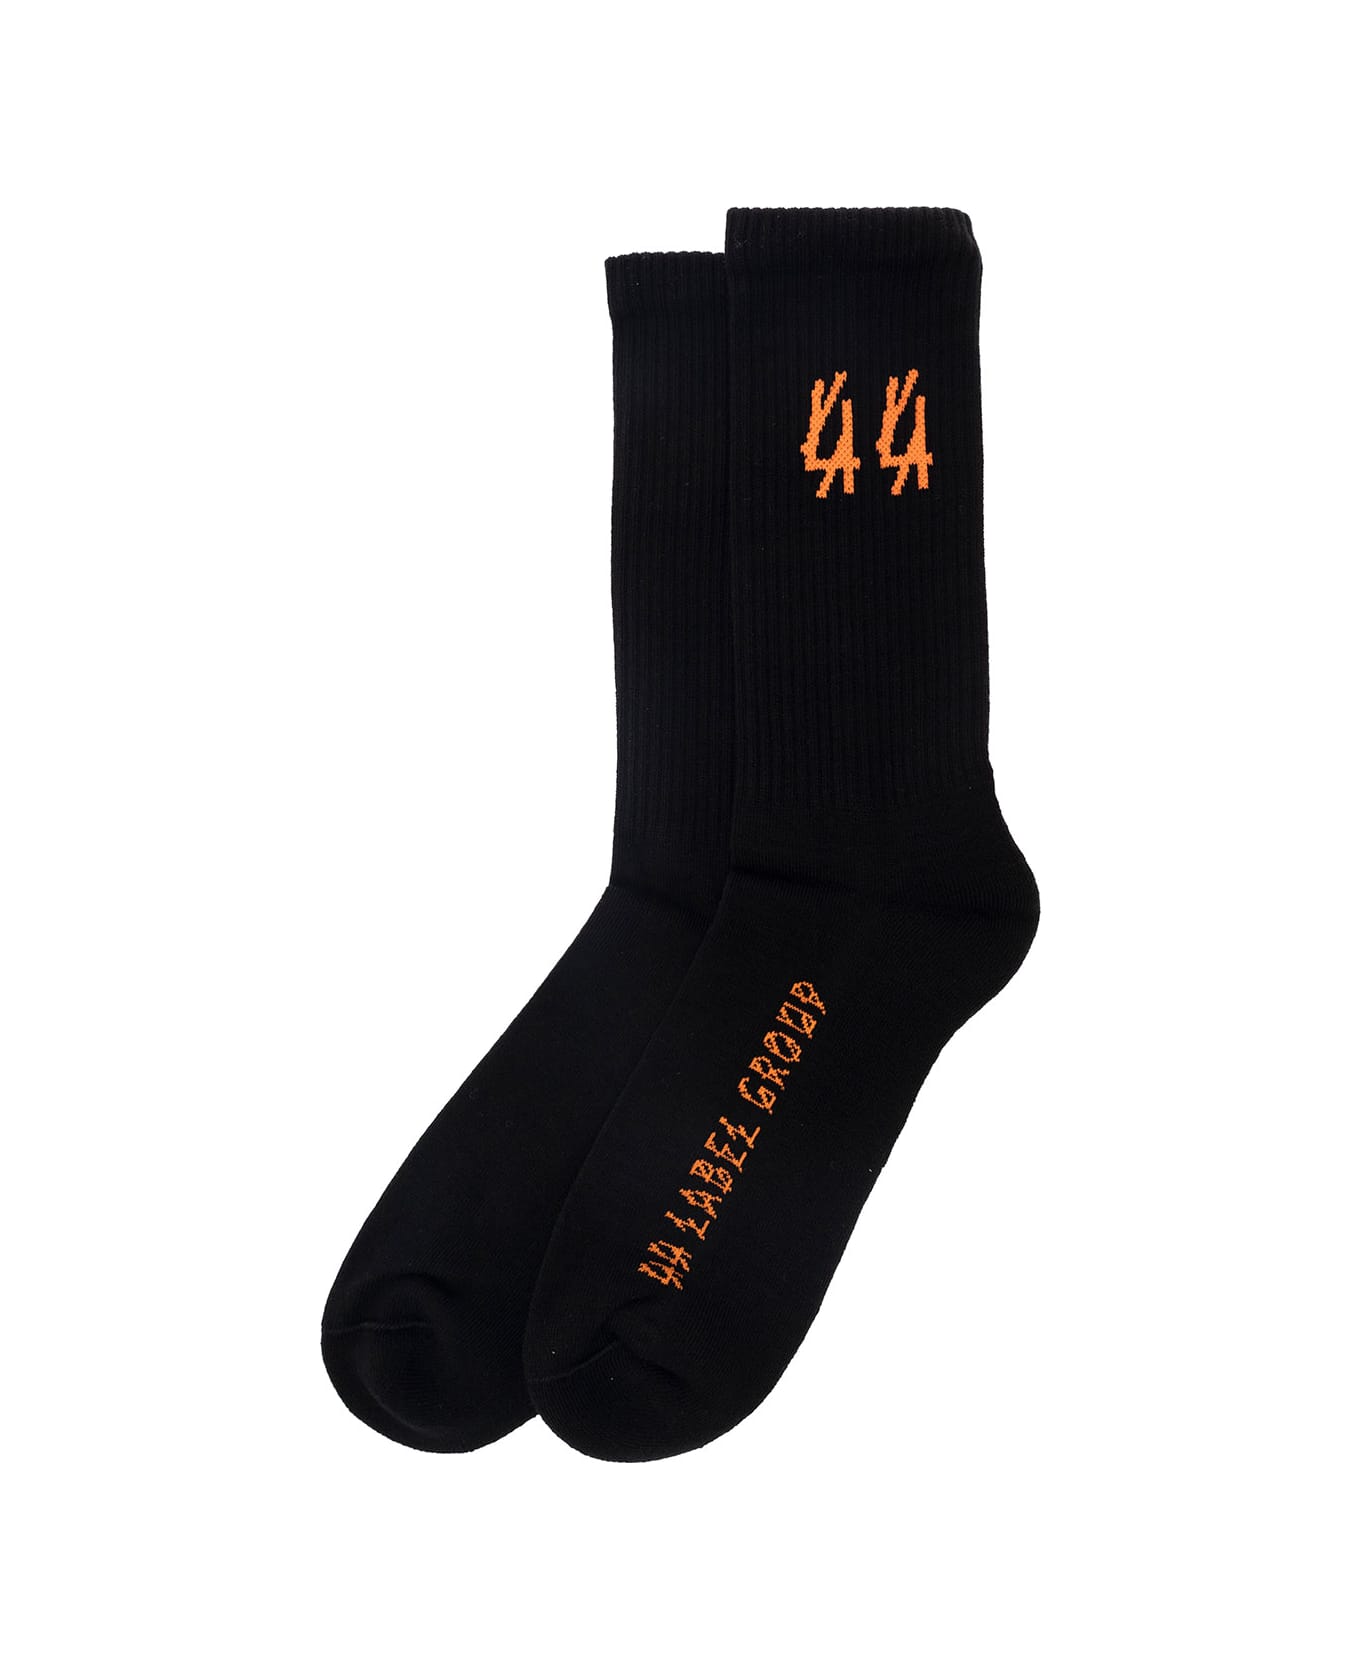 44 Label Group Black Socks With Contrasting Logo Detail In Cotton Blend Man - Black 靴下